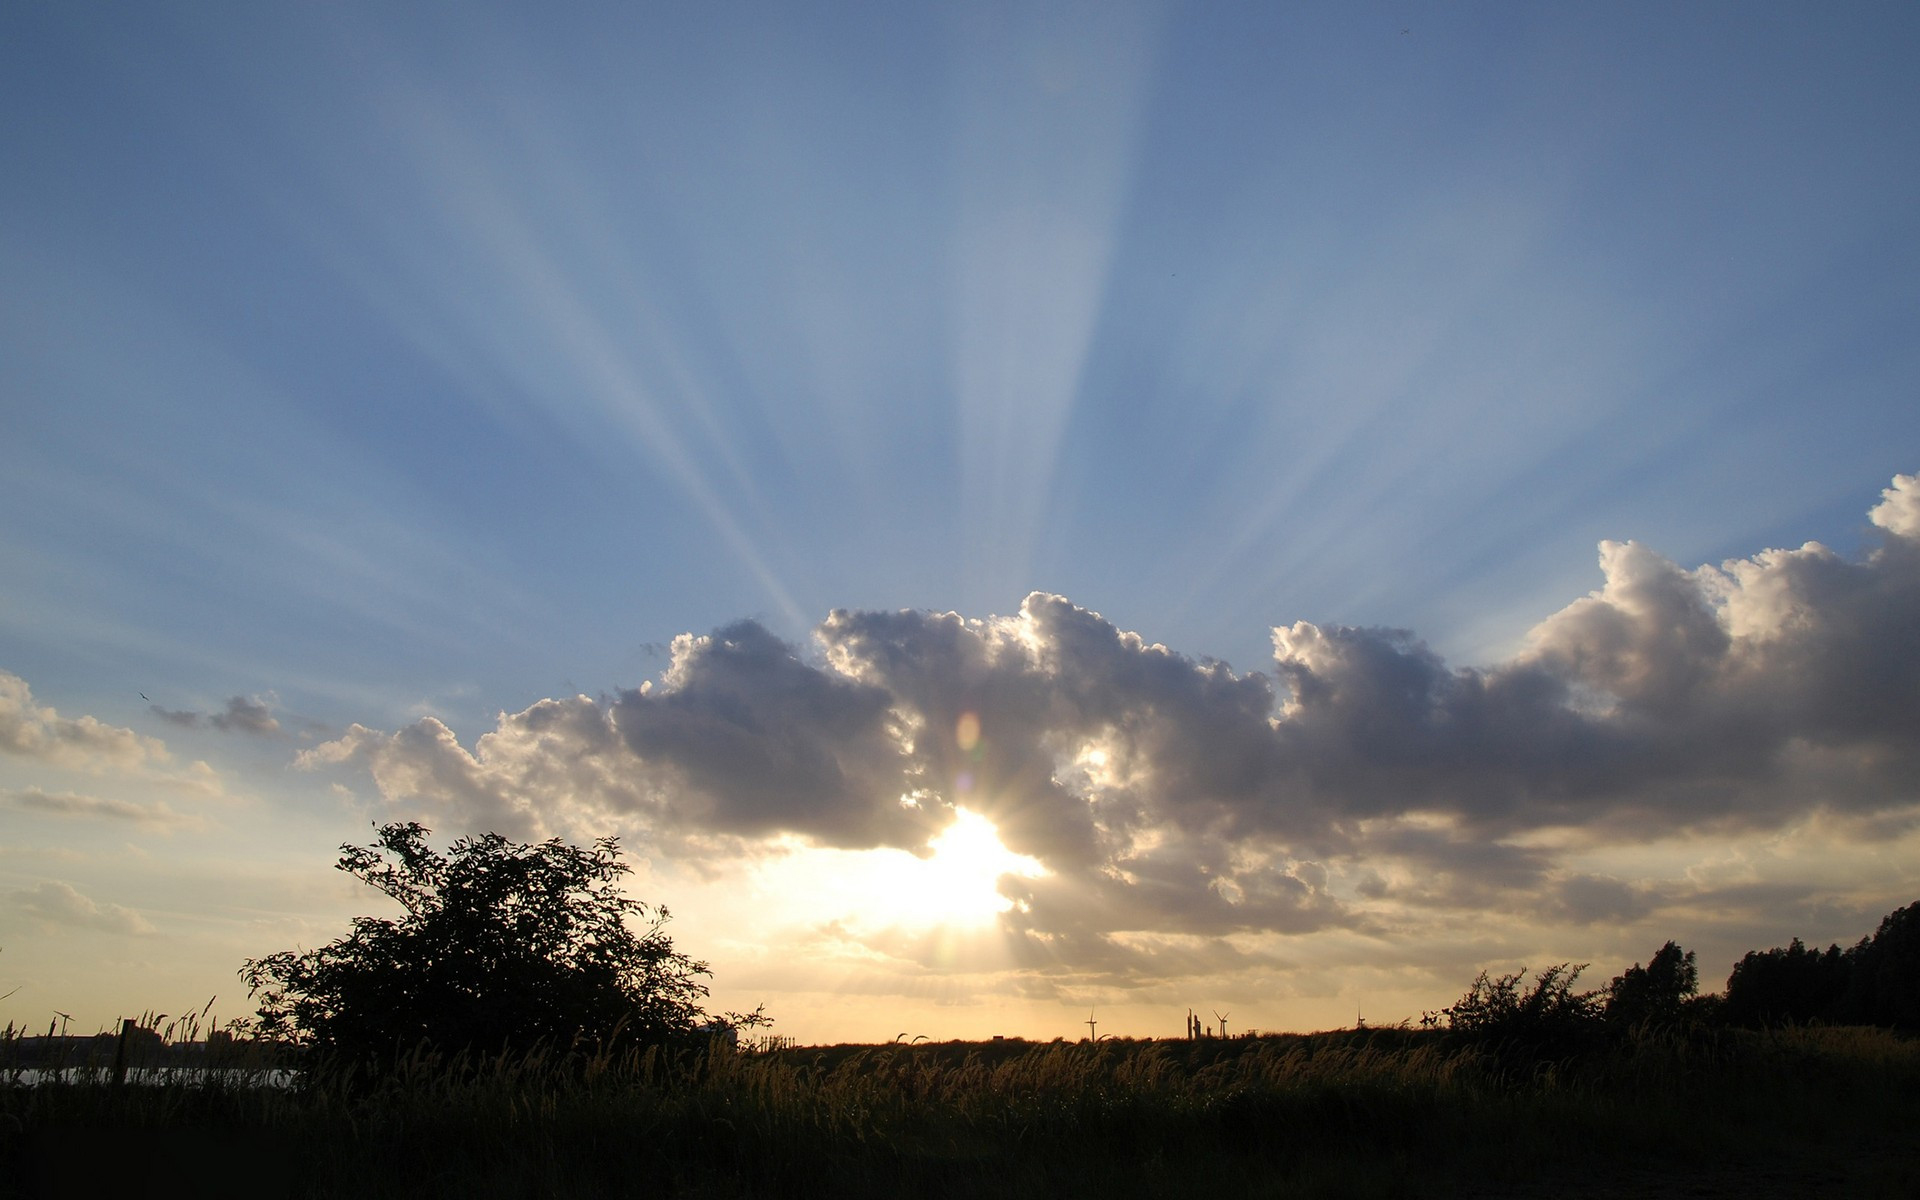 Бесплатное фото Обои солнце, небо, облака на телефон высокого качества